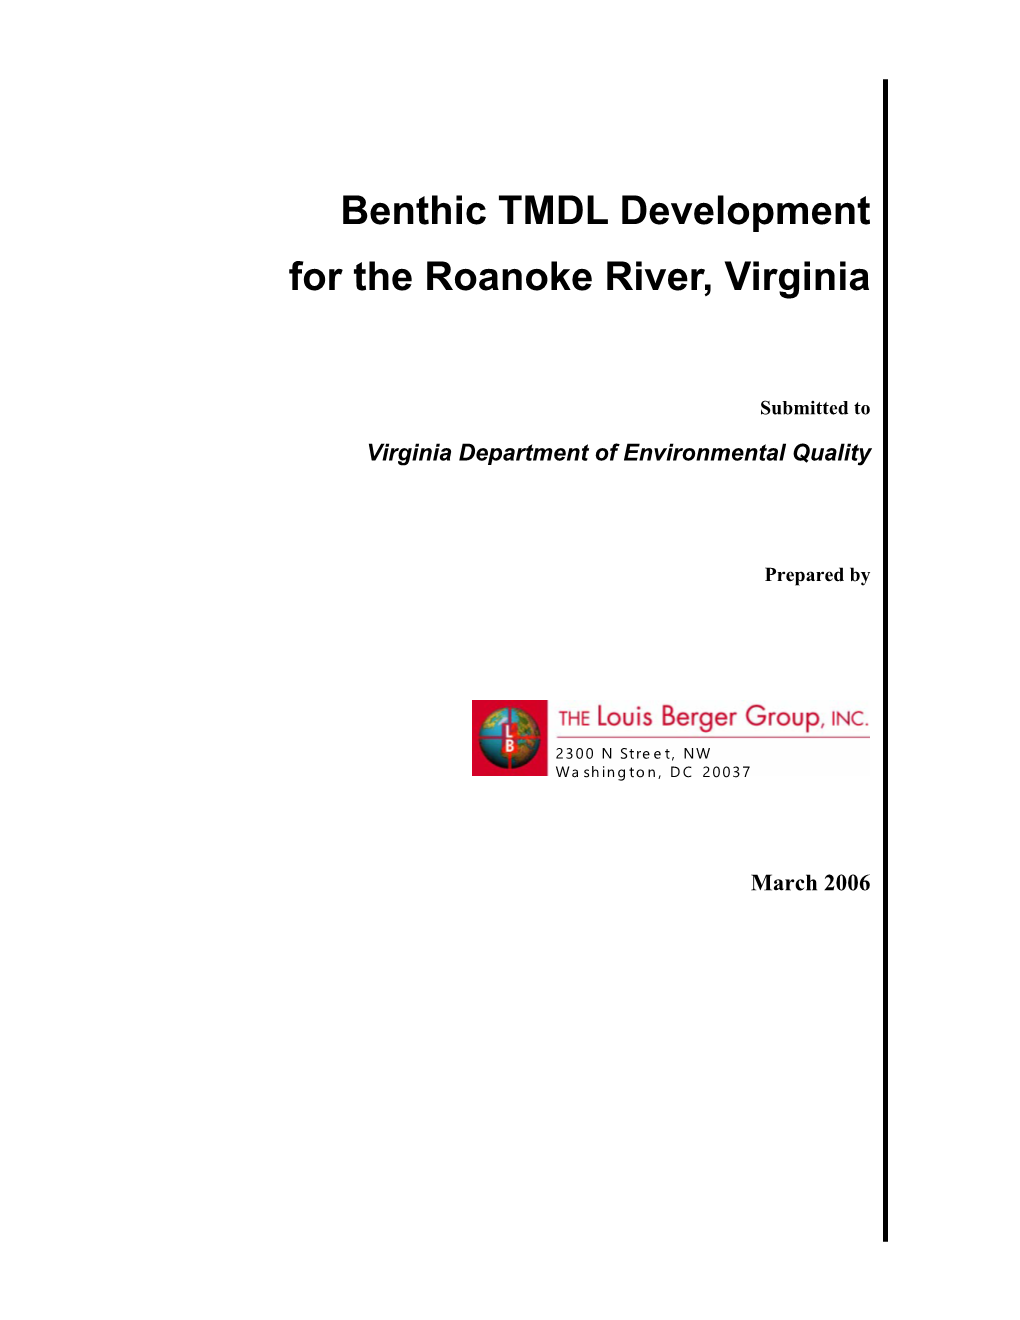 Benthic TMDL Development for the Roanoke River, Virginia